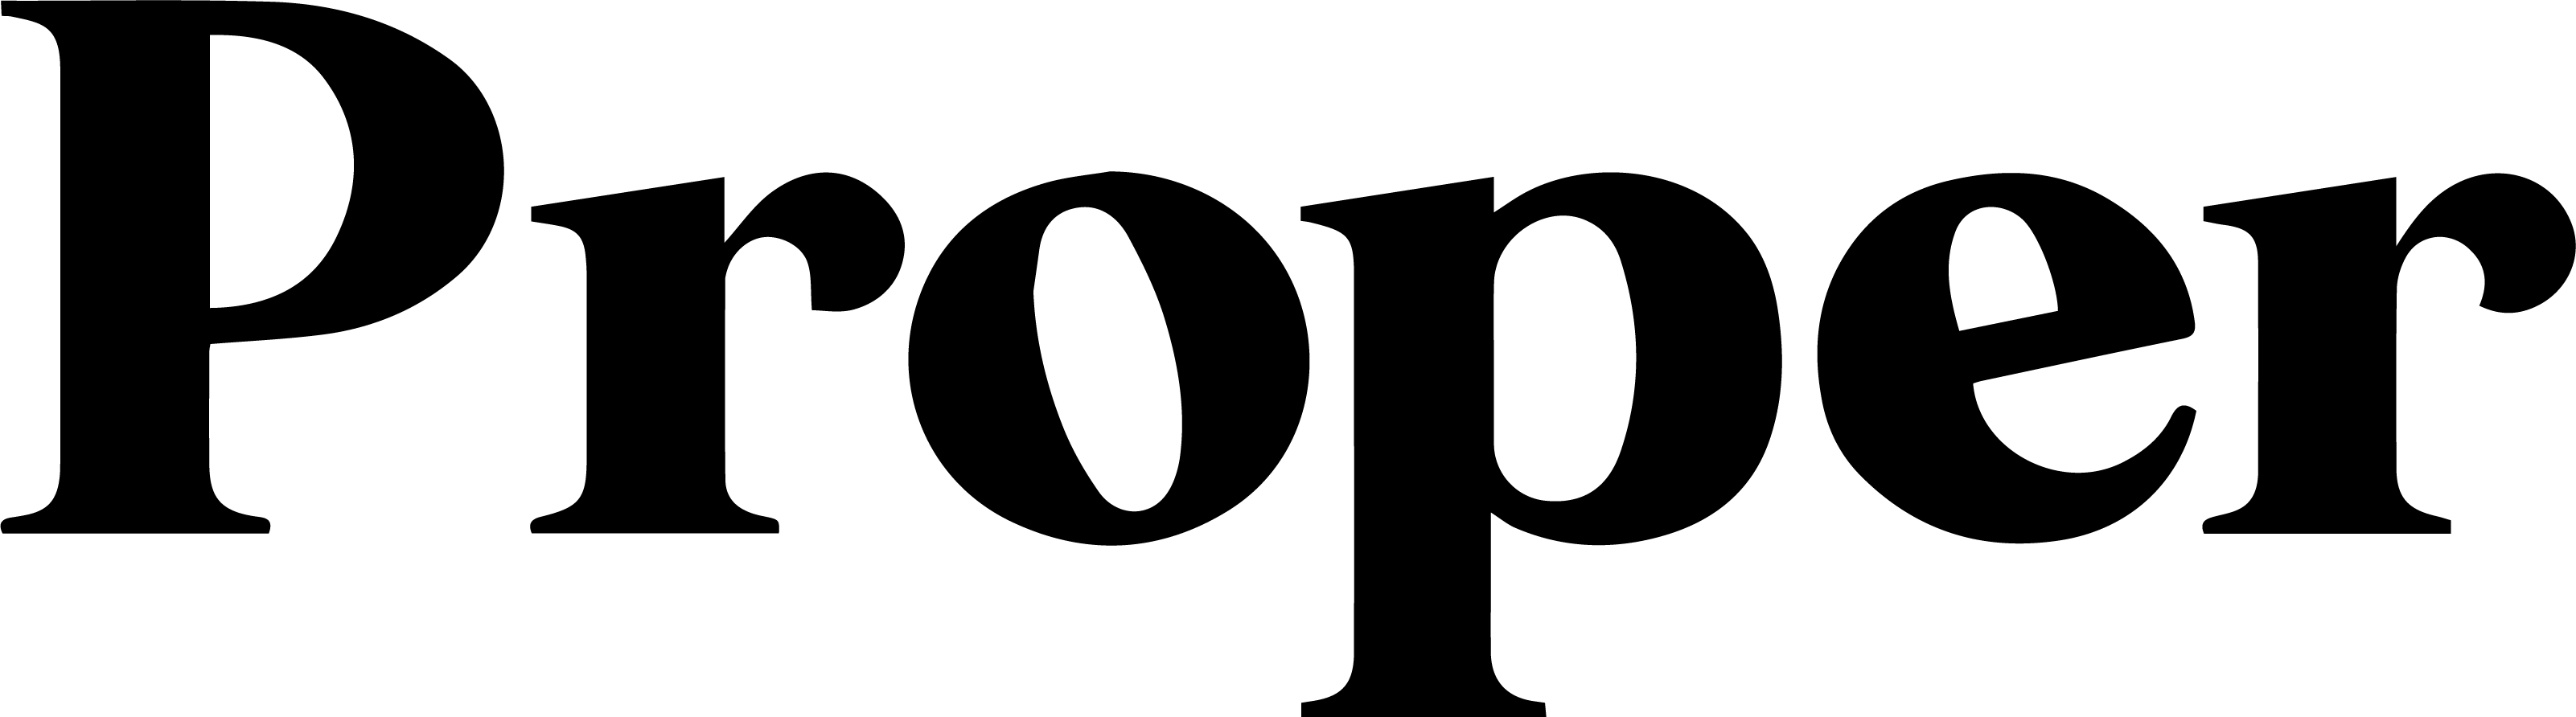 Proper_Logo